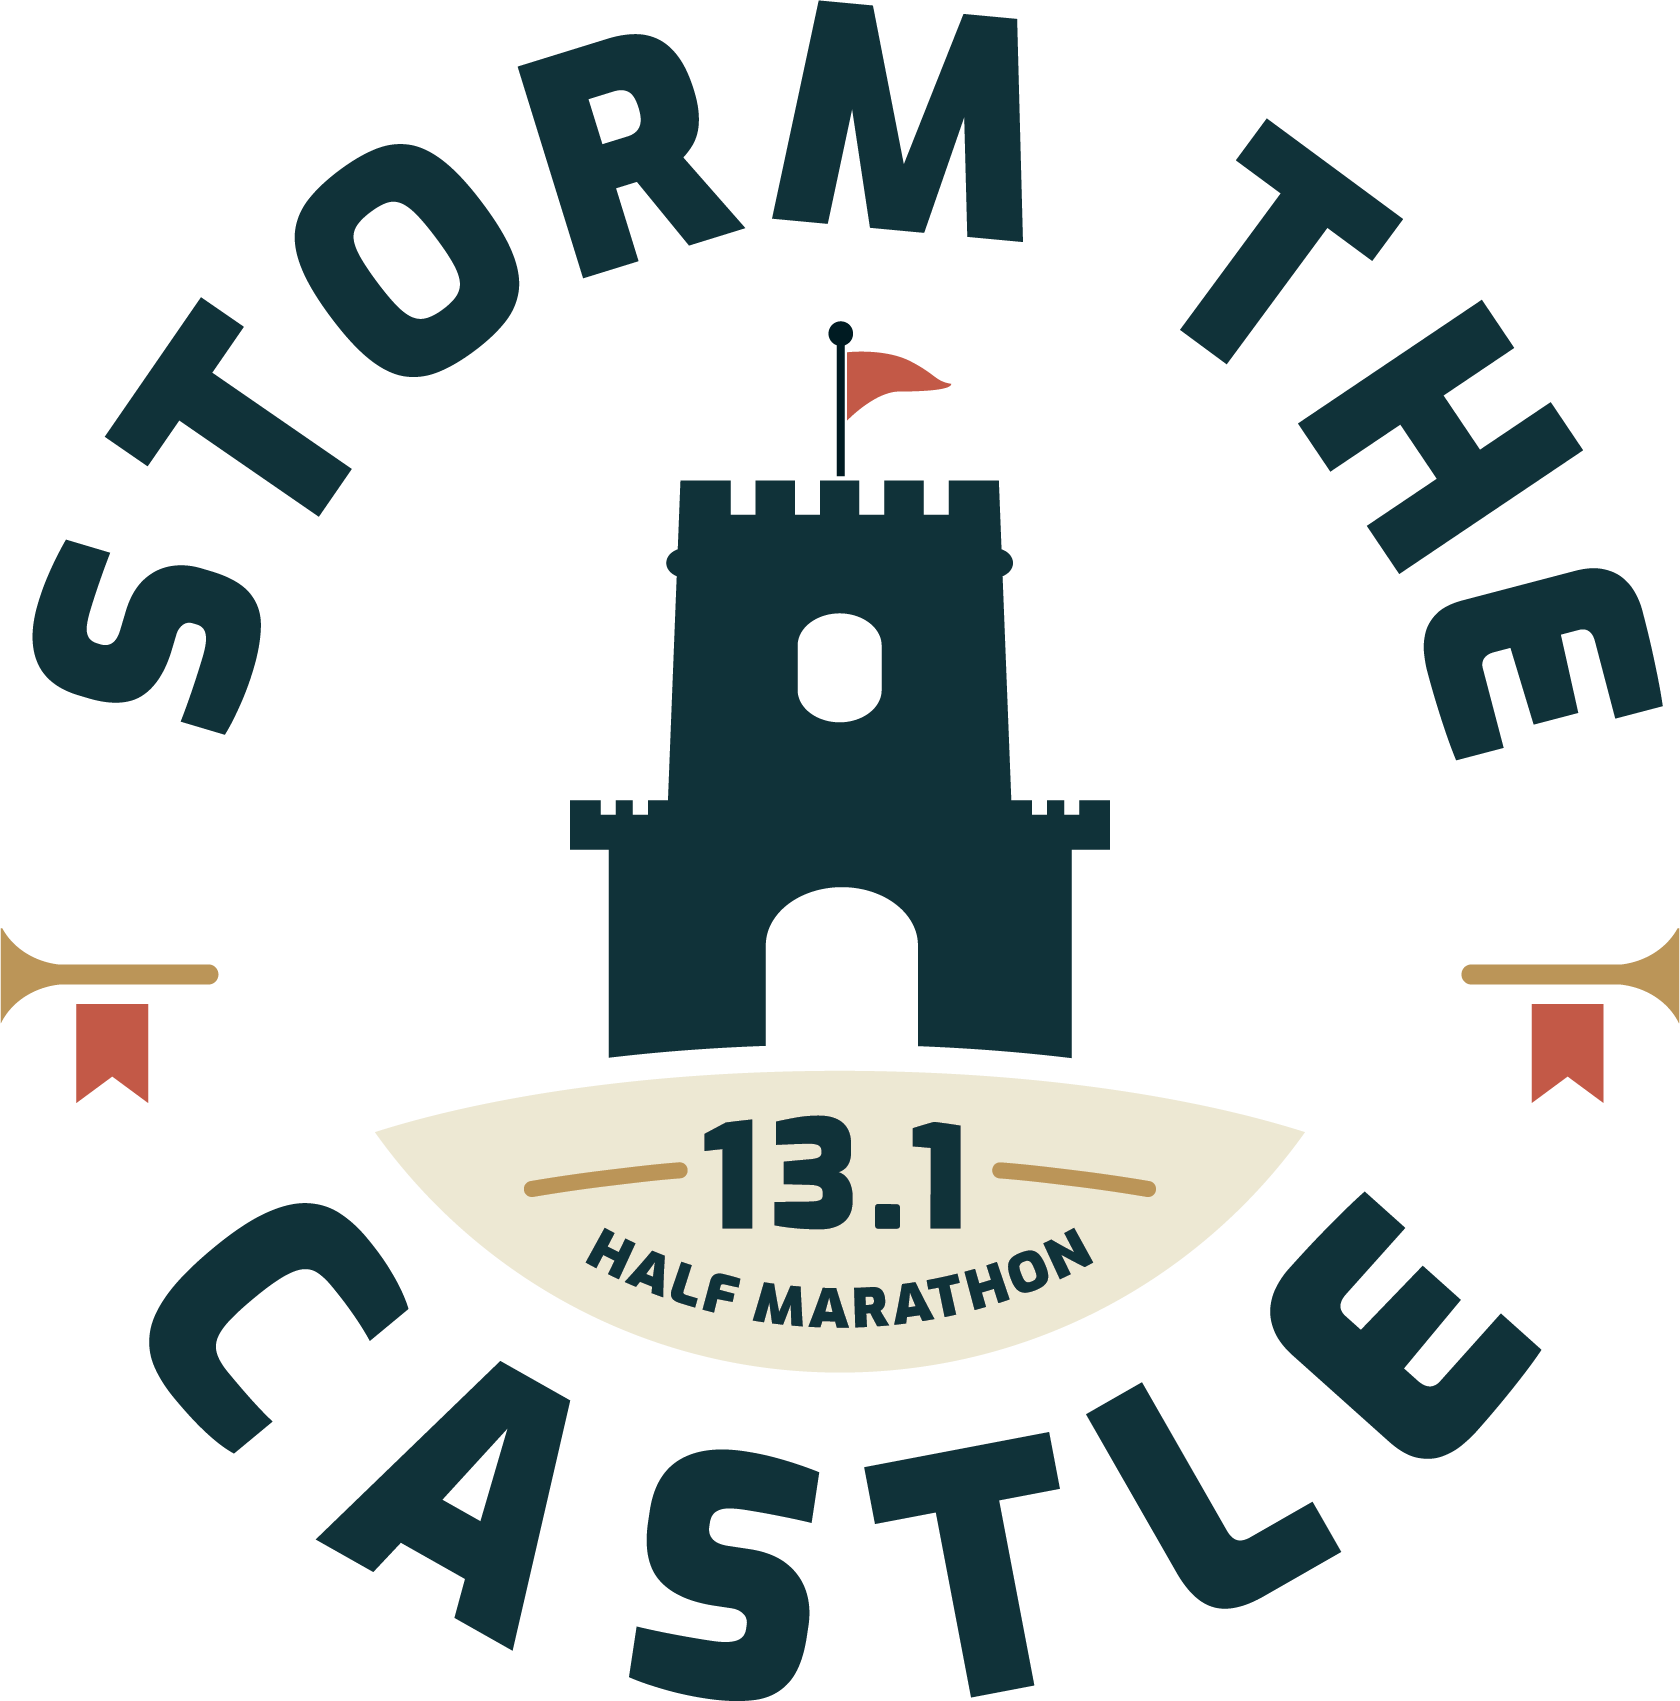 Storm the Castle Half Marathon logo on RaceRaves